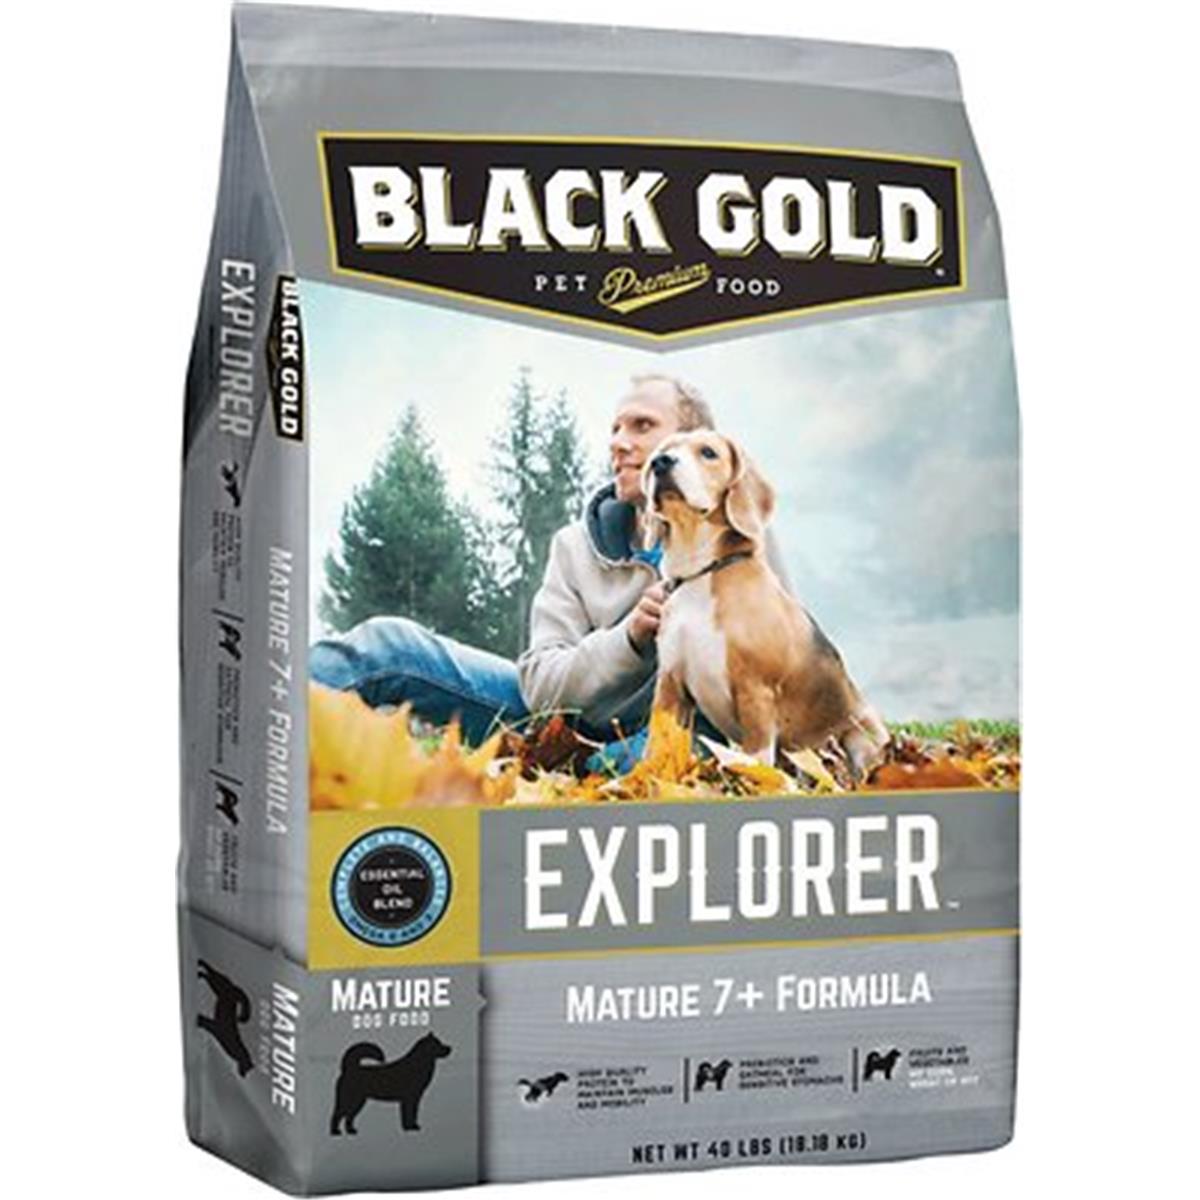 Bg26202 Explorer Mature 7 Plus Formula Dry Dog Food - 40 Lbs